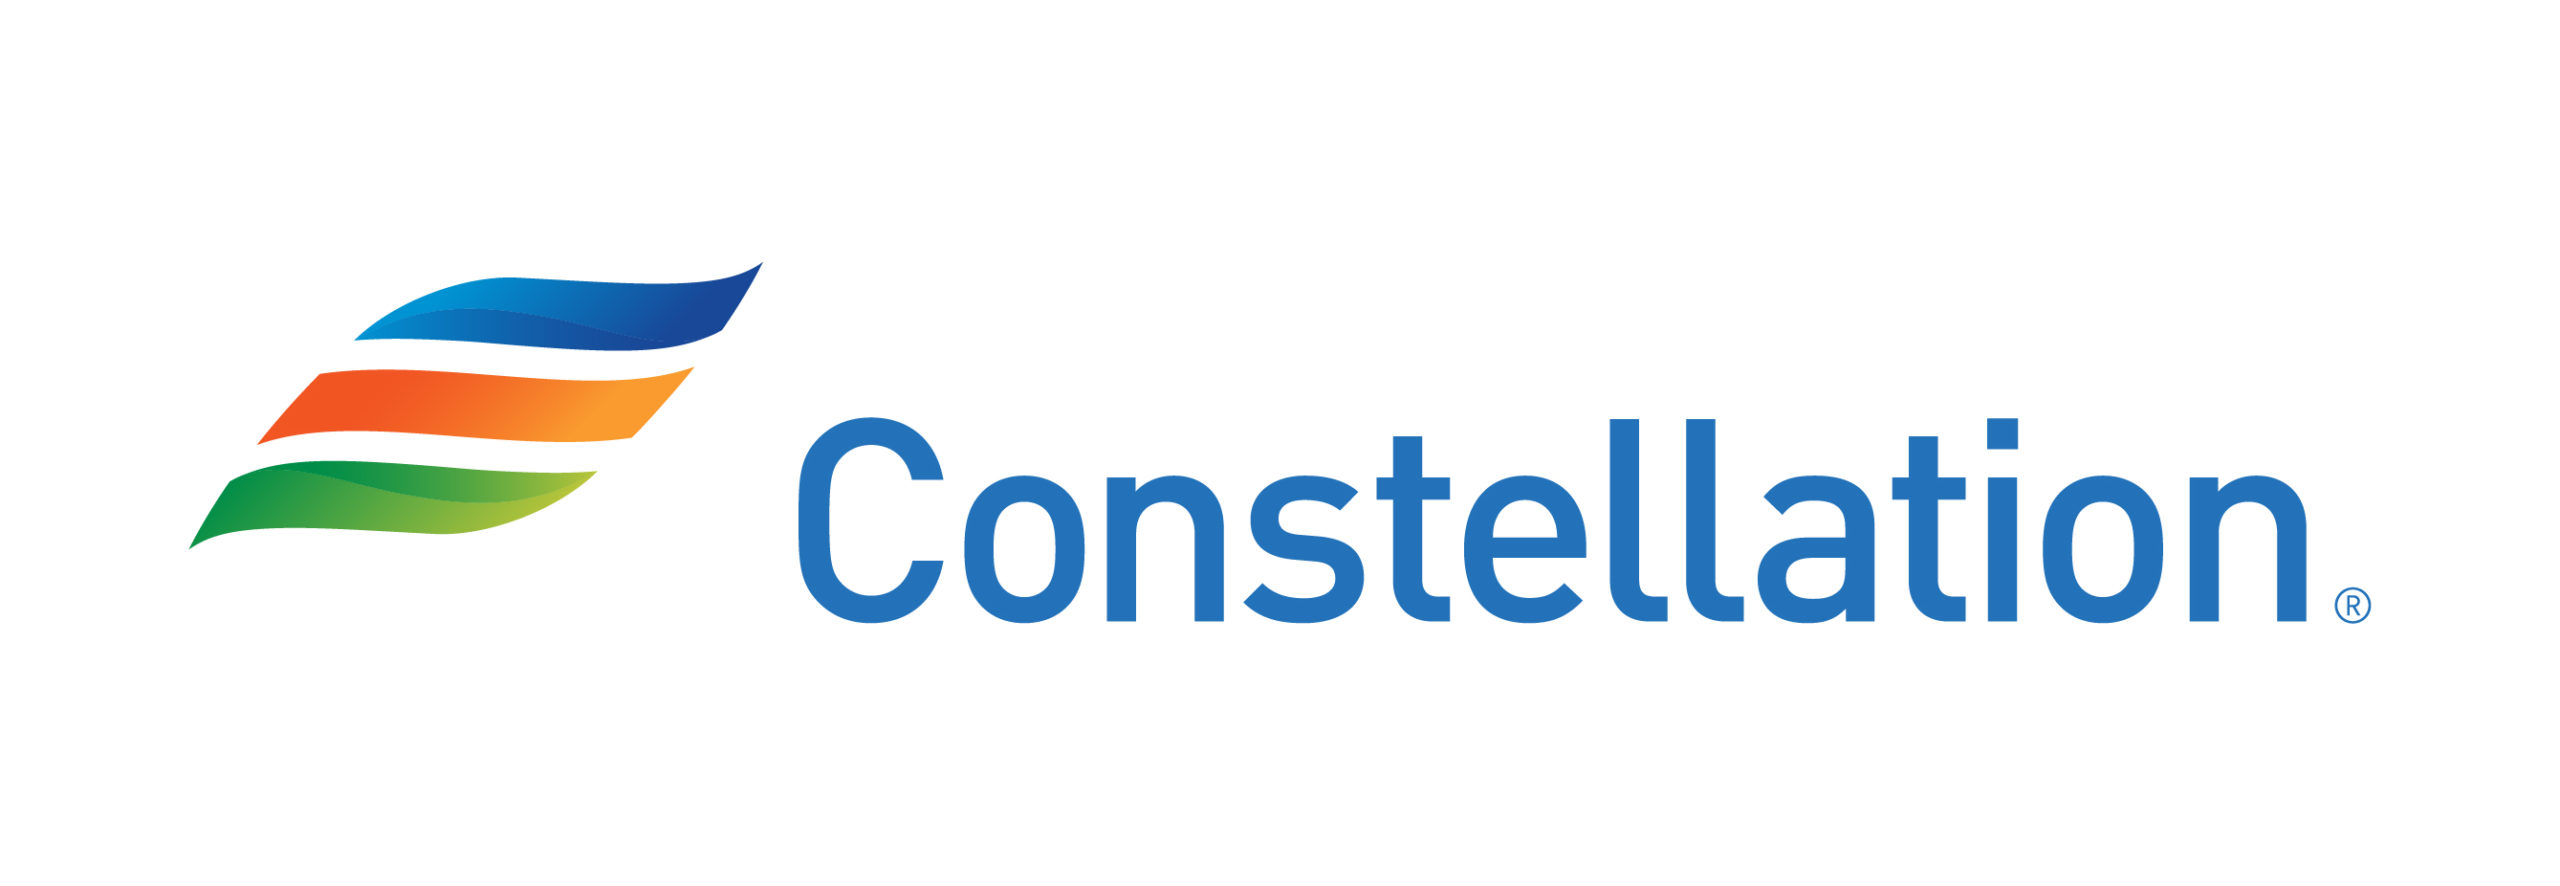 Constellation Energy Corporation